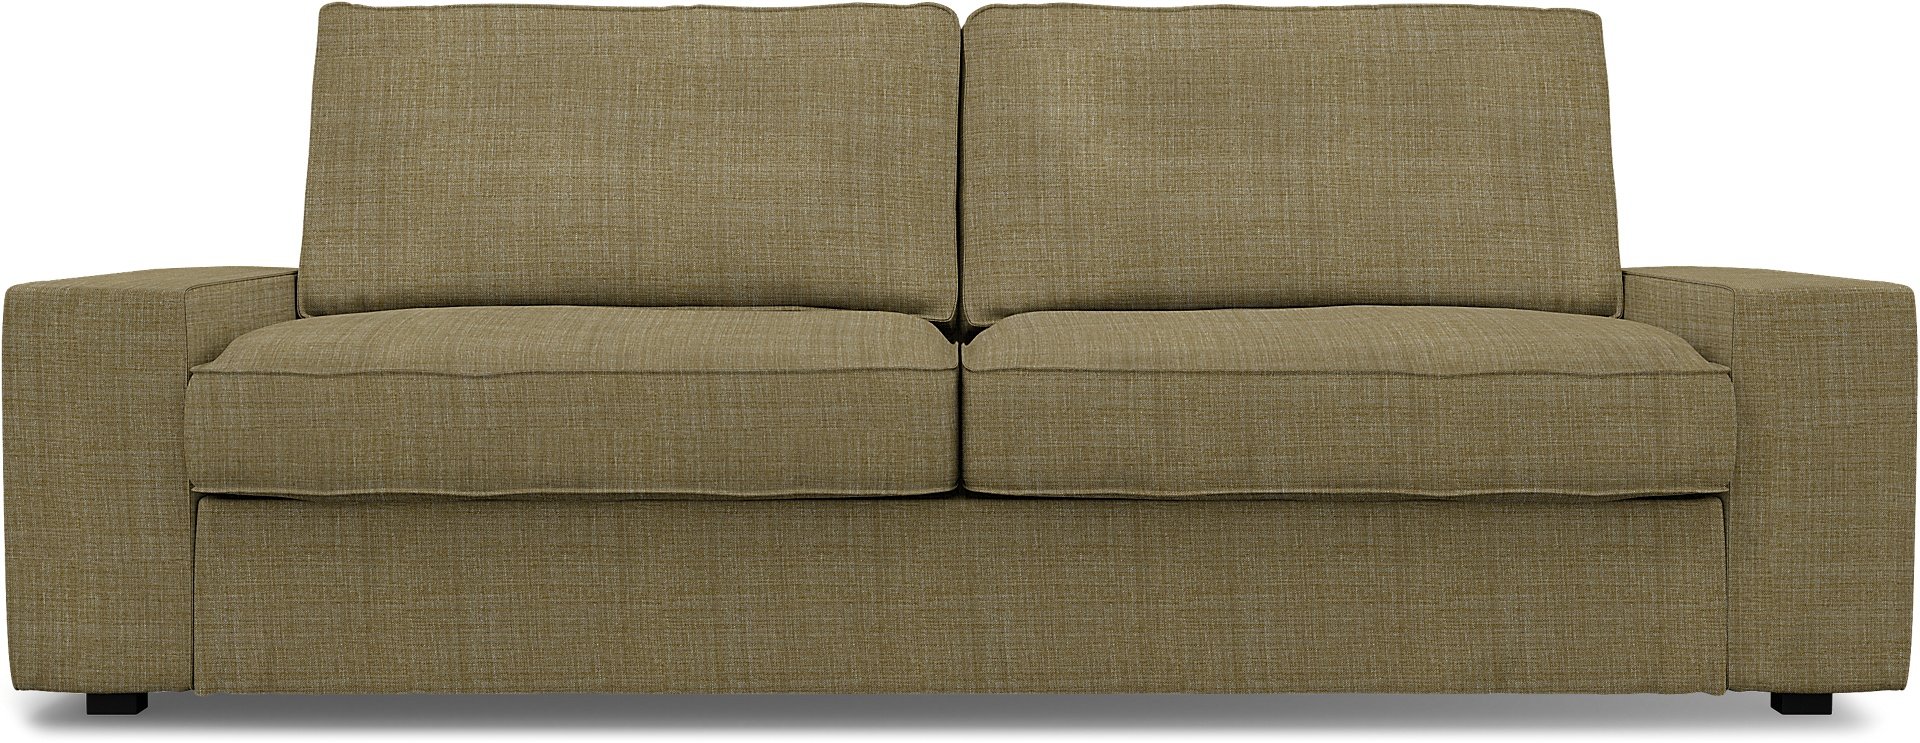 IKEA - Kivik 3 Seater Sofa Cover, Dusty Yellow, Boucle & Texture - Bemz